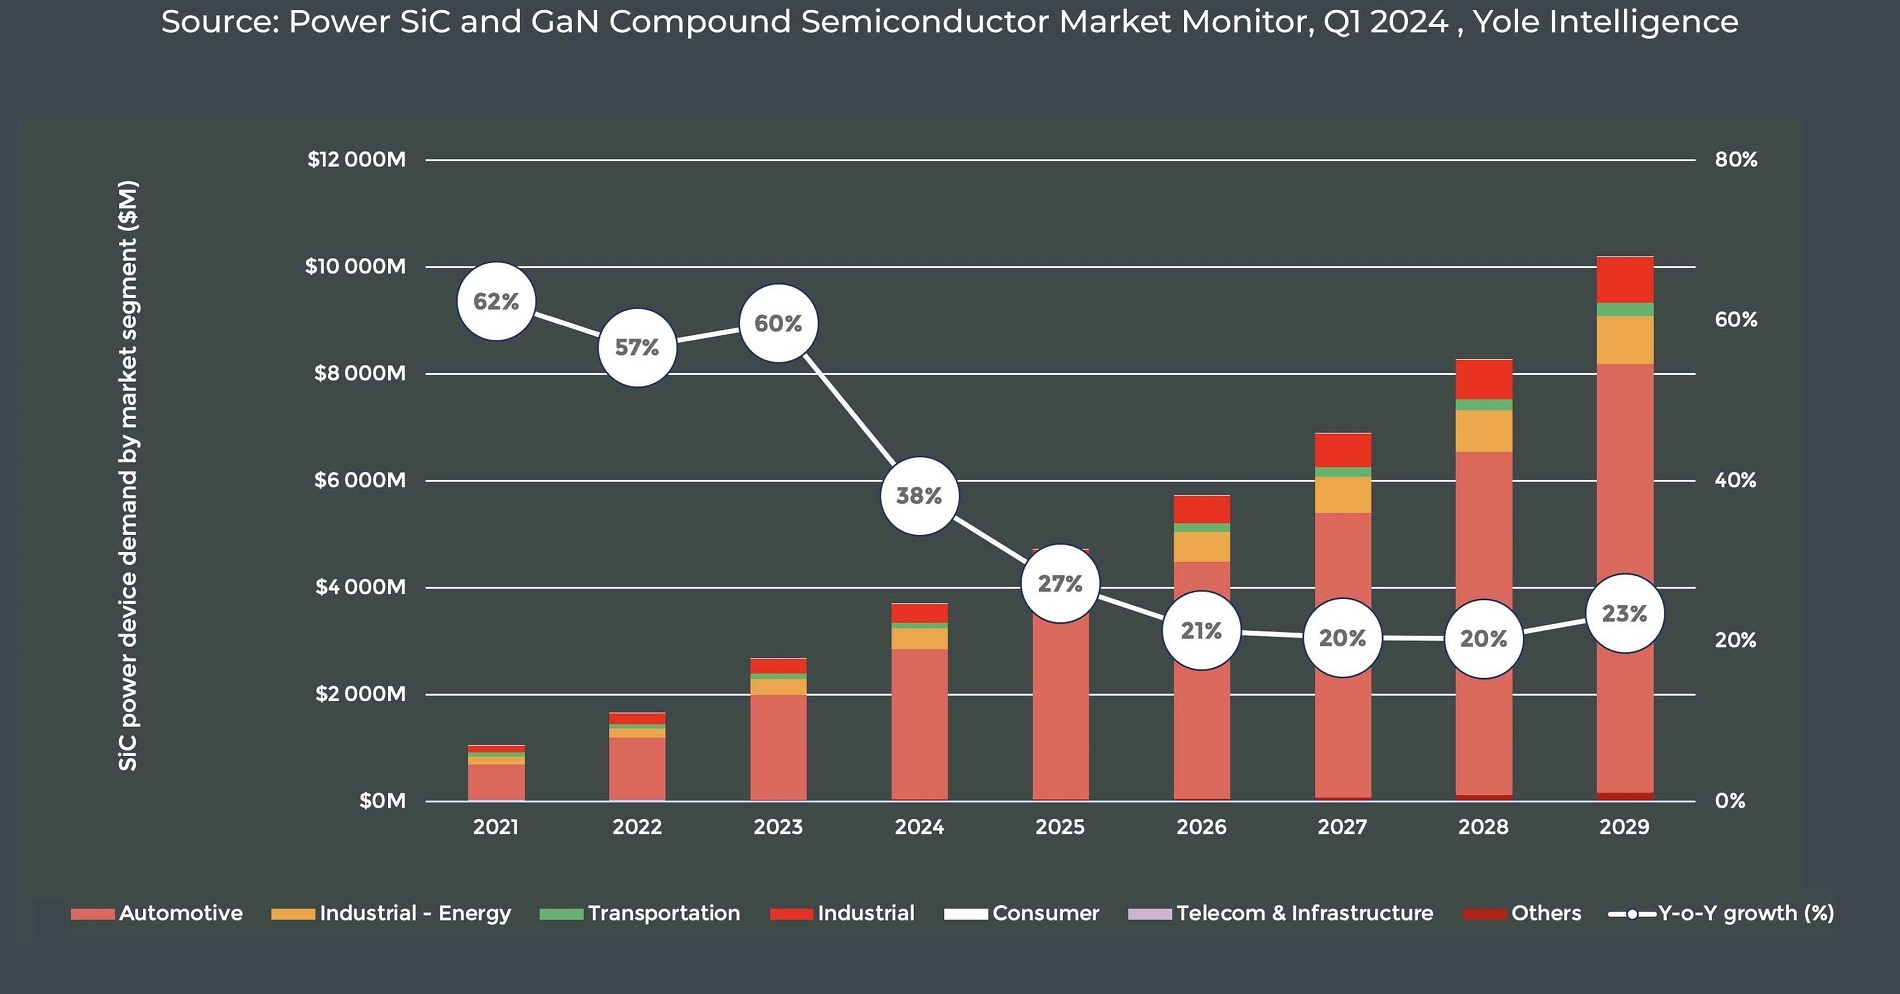 SiCパワーデバイス市場、2029年までに100億ドル規模へ